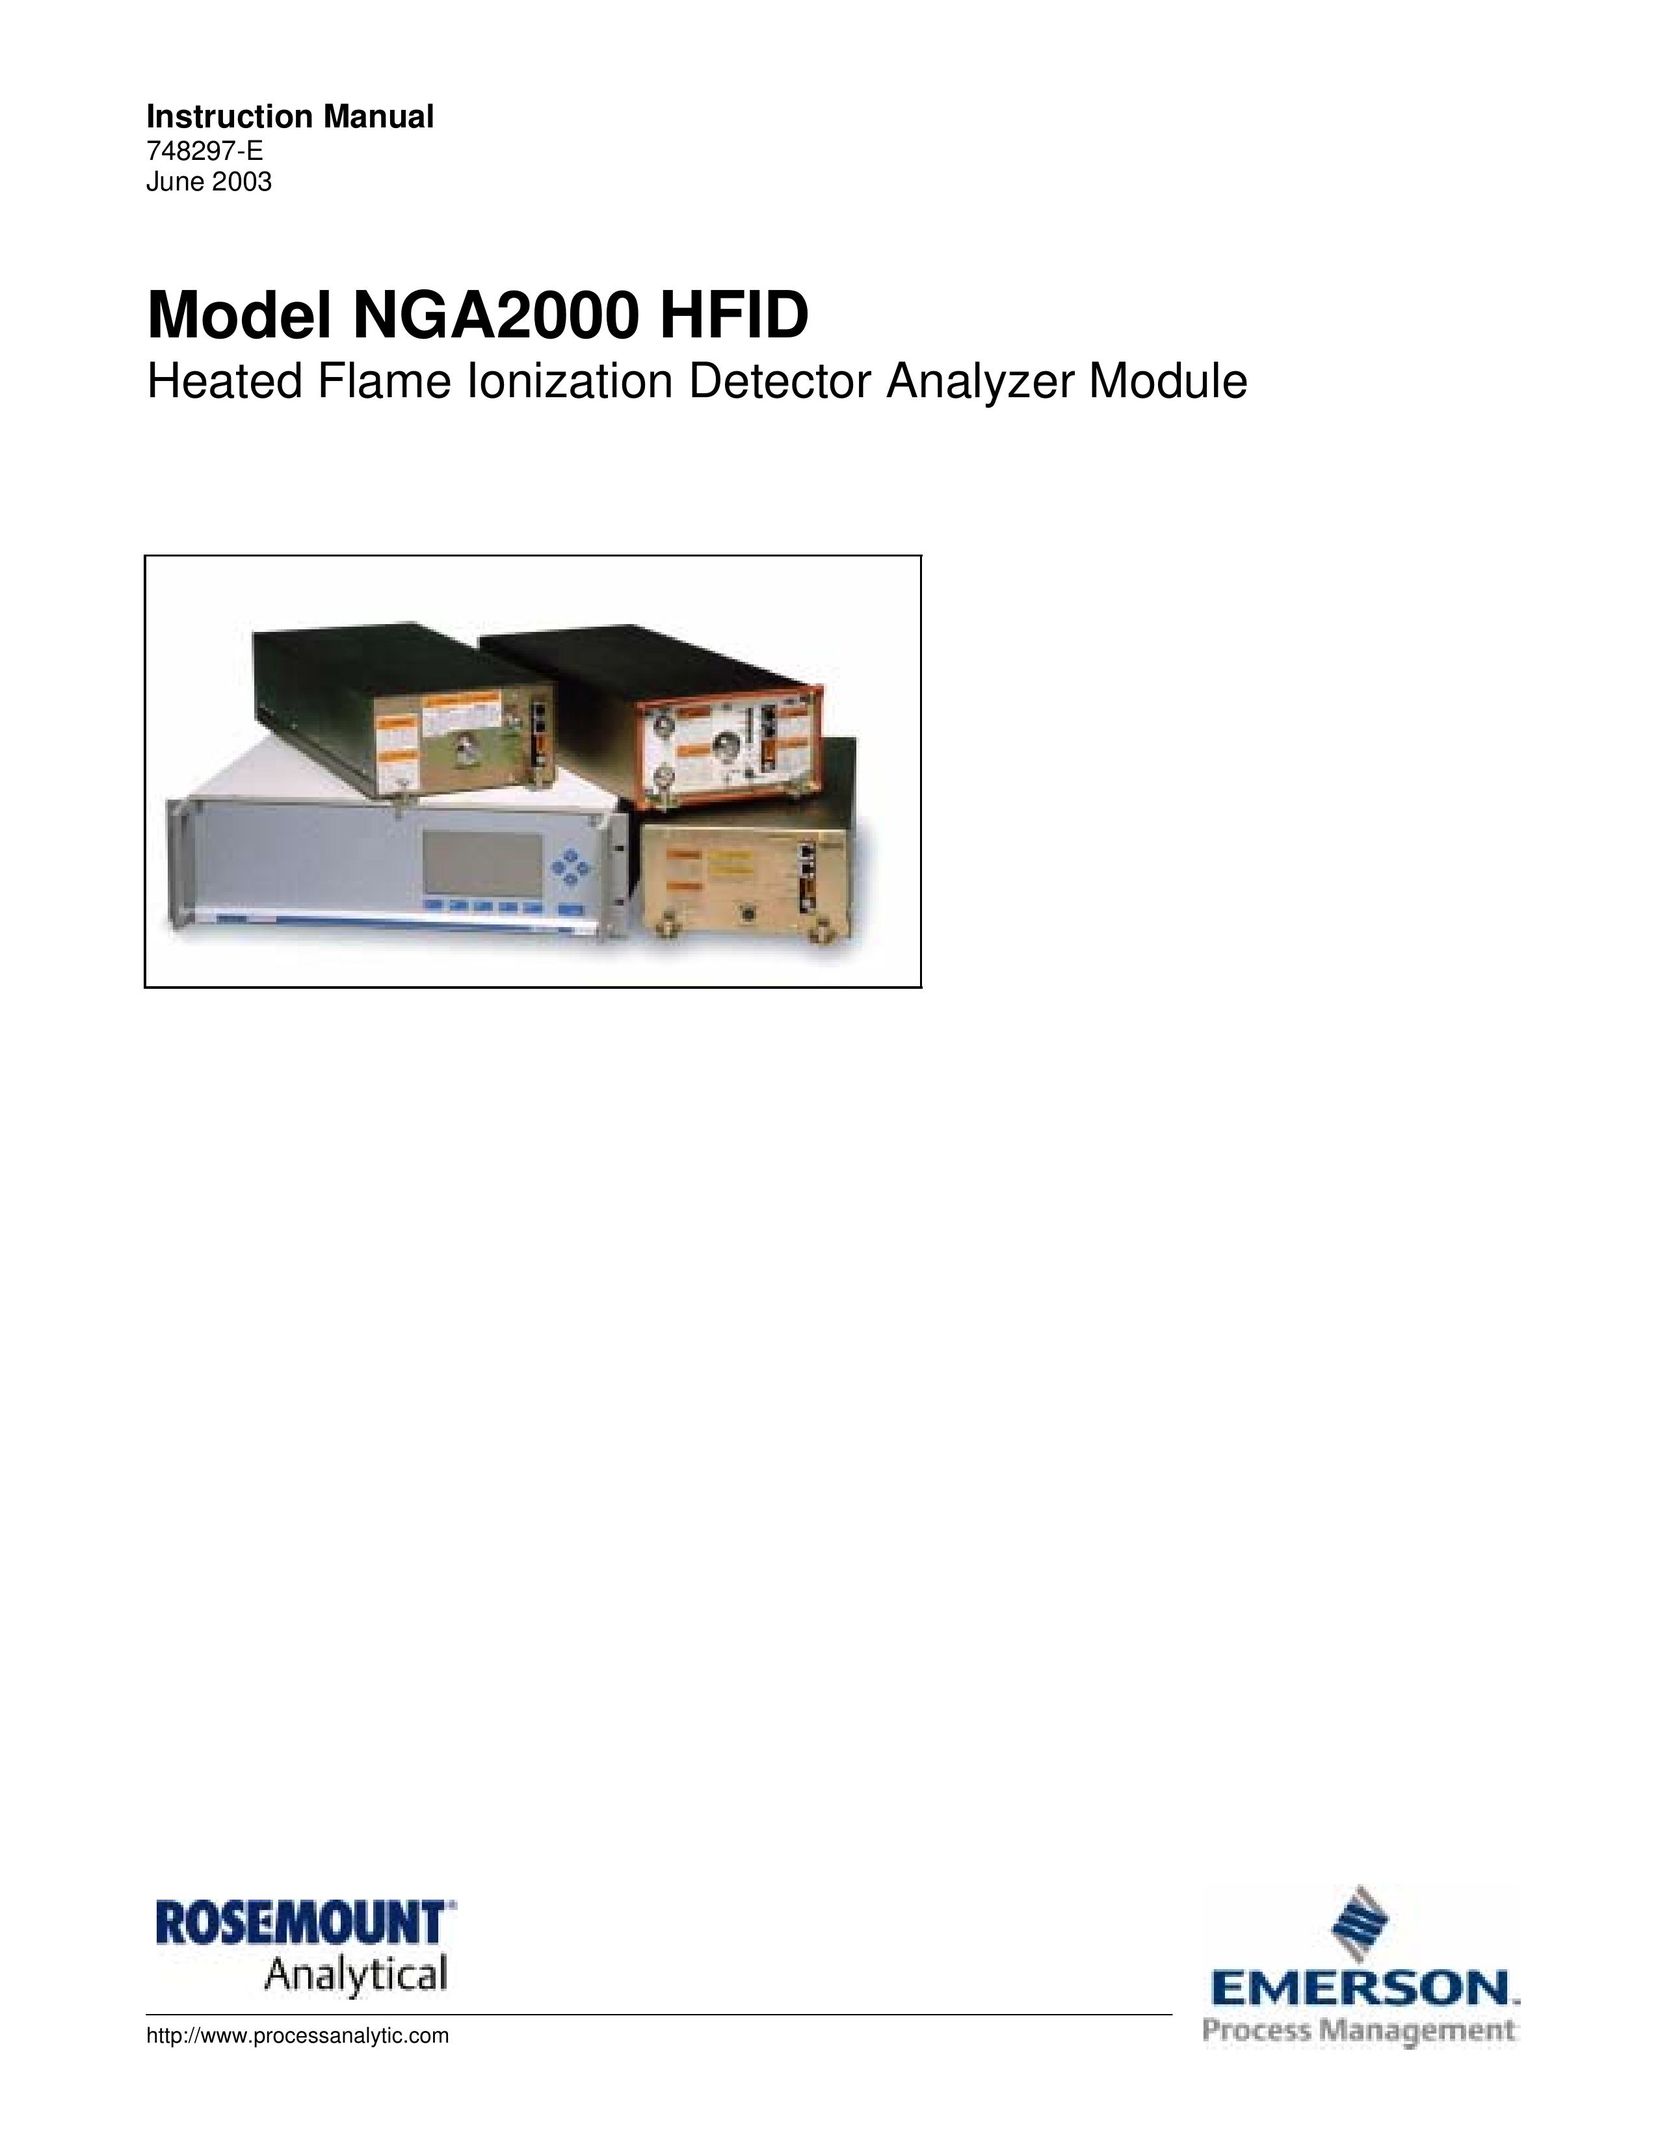 Emerson Process Management NGA2000 HFID Fitness Equipment User Manual